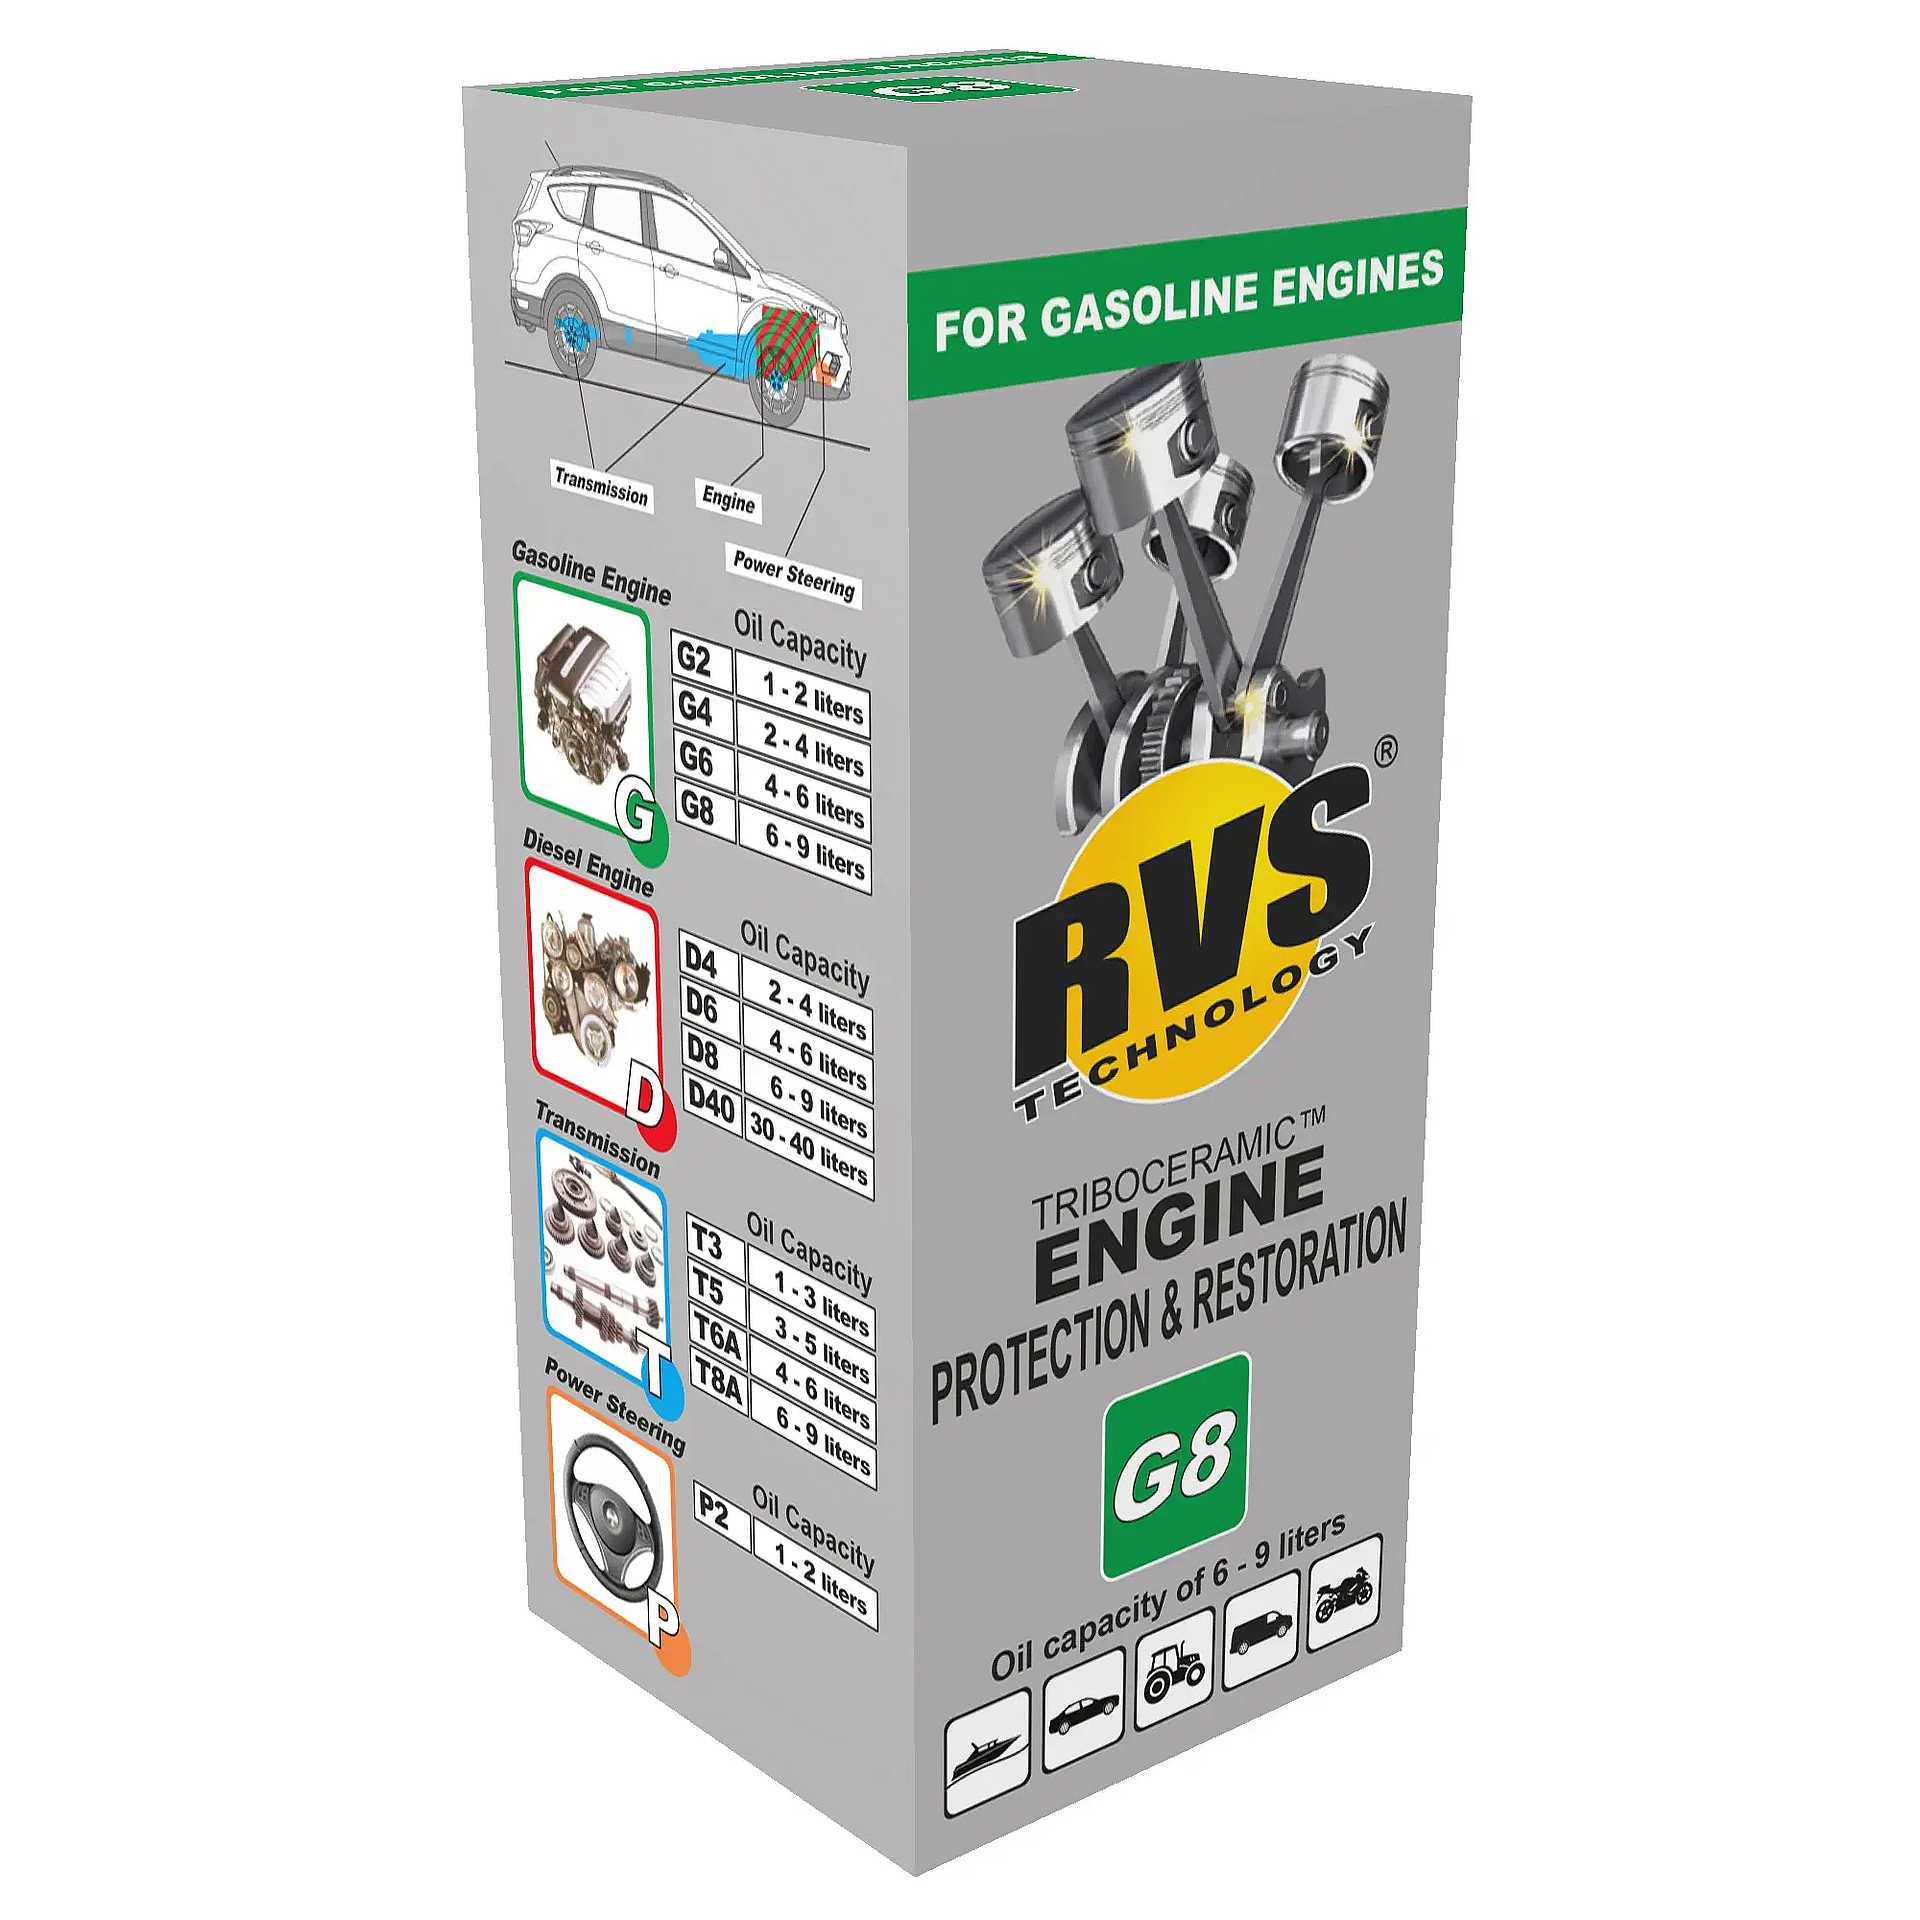 RVS Engine Protection & Restoration G8